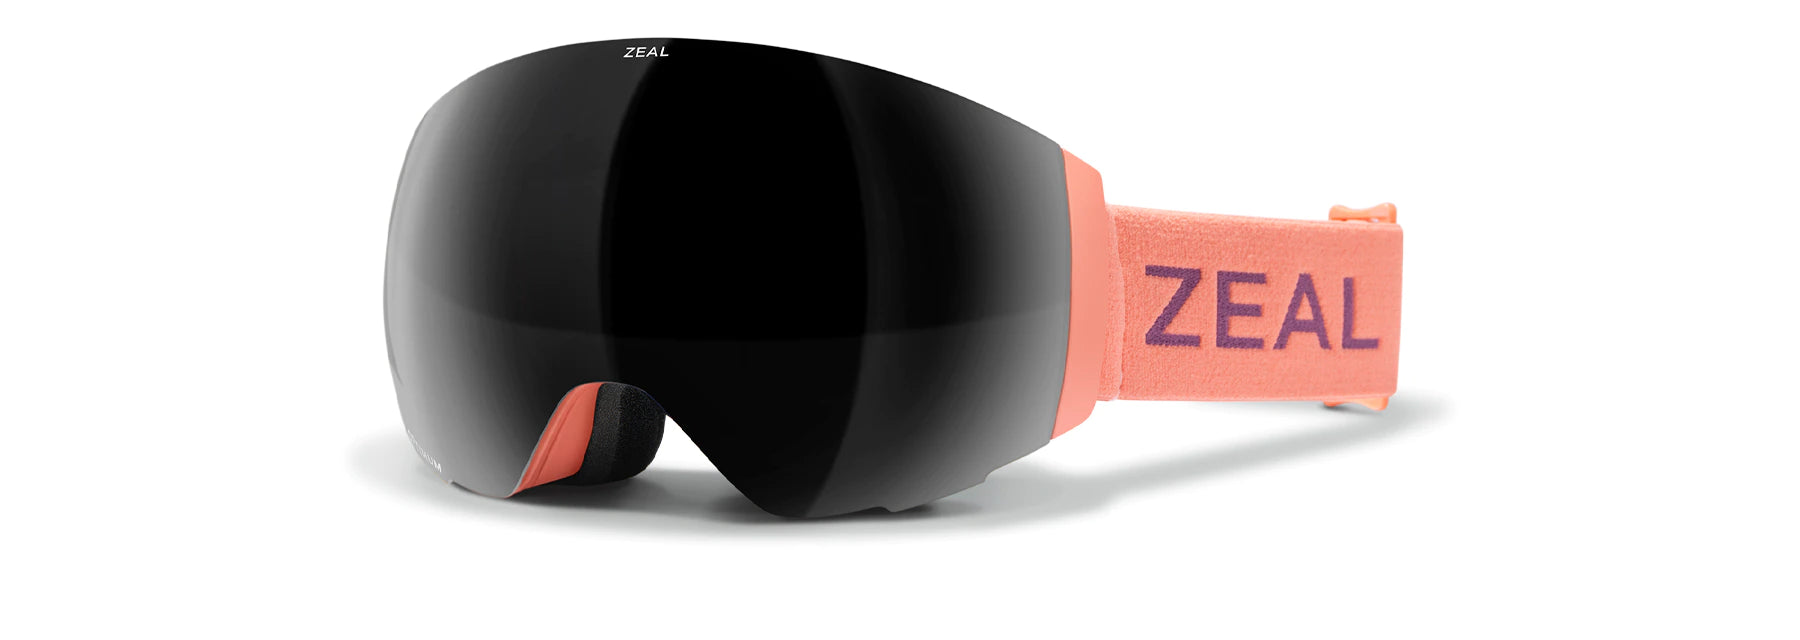 Zeal- Portal RLS Ski & Snowboard Goggles w/ Bonus Lens pink strap